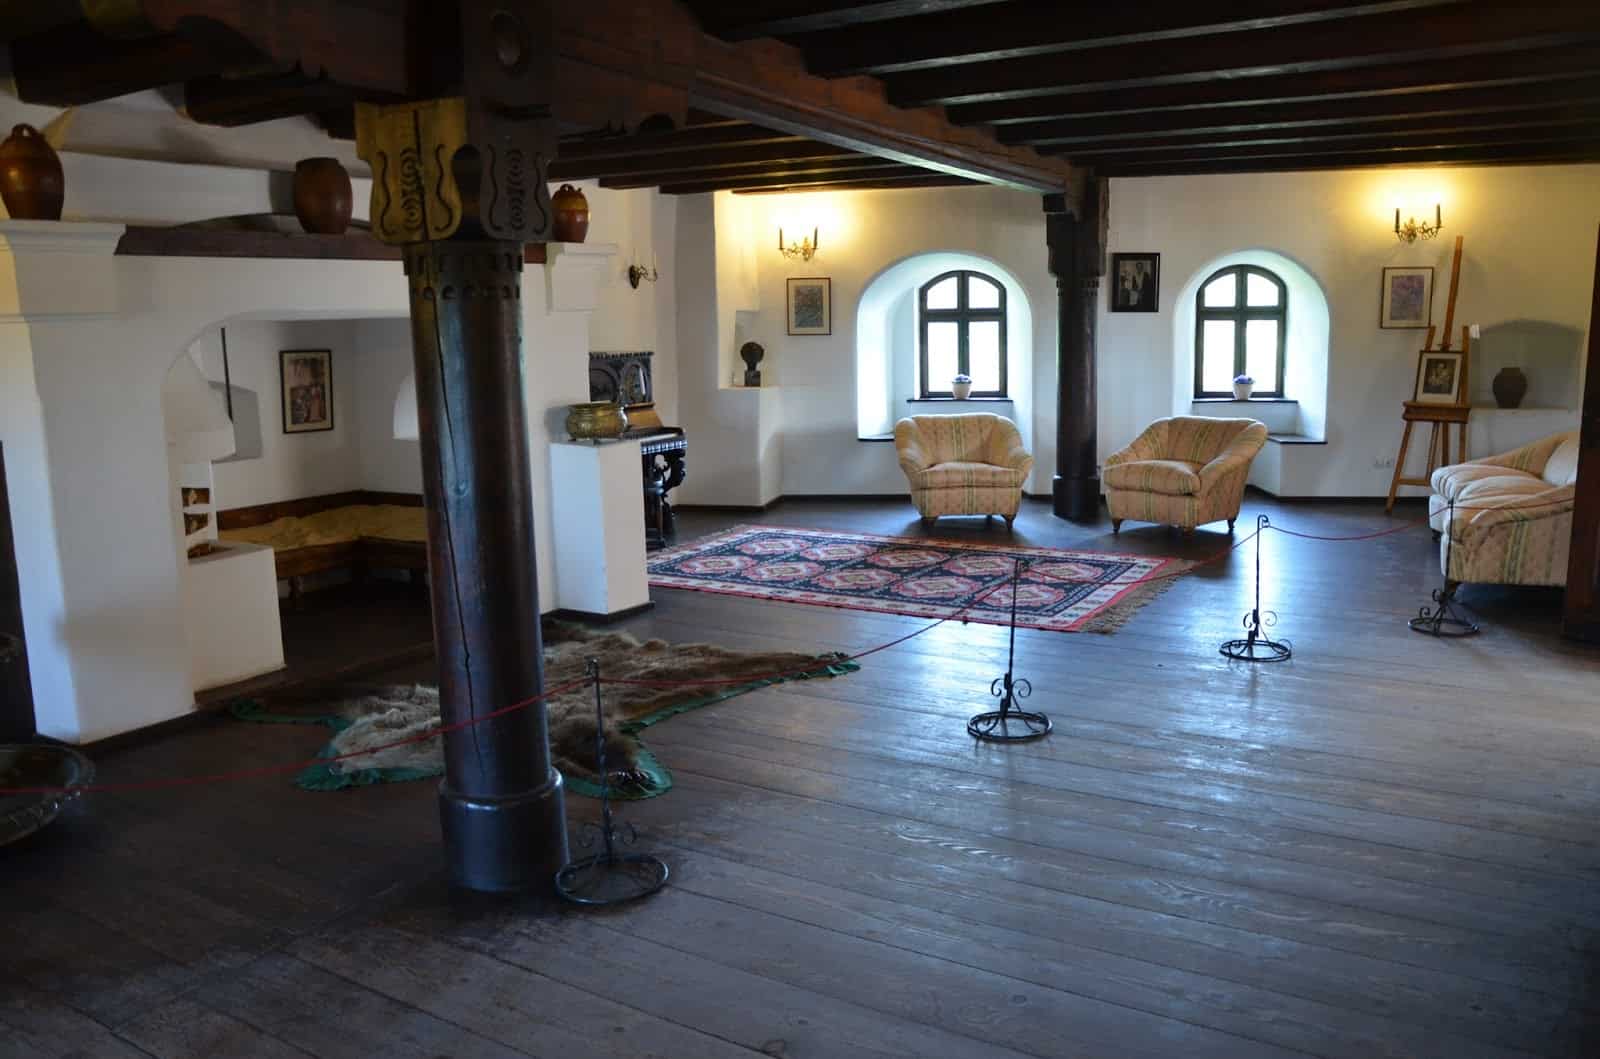 Music room at Bran Castle in Bran, Romania